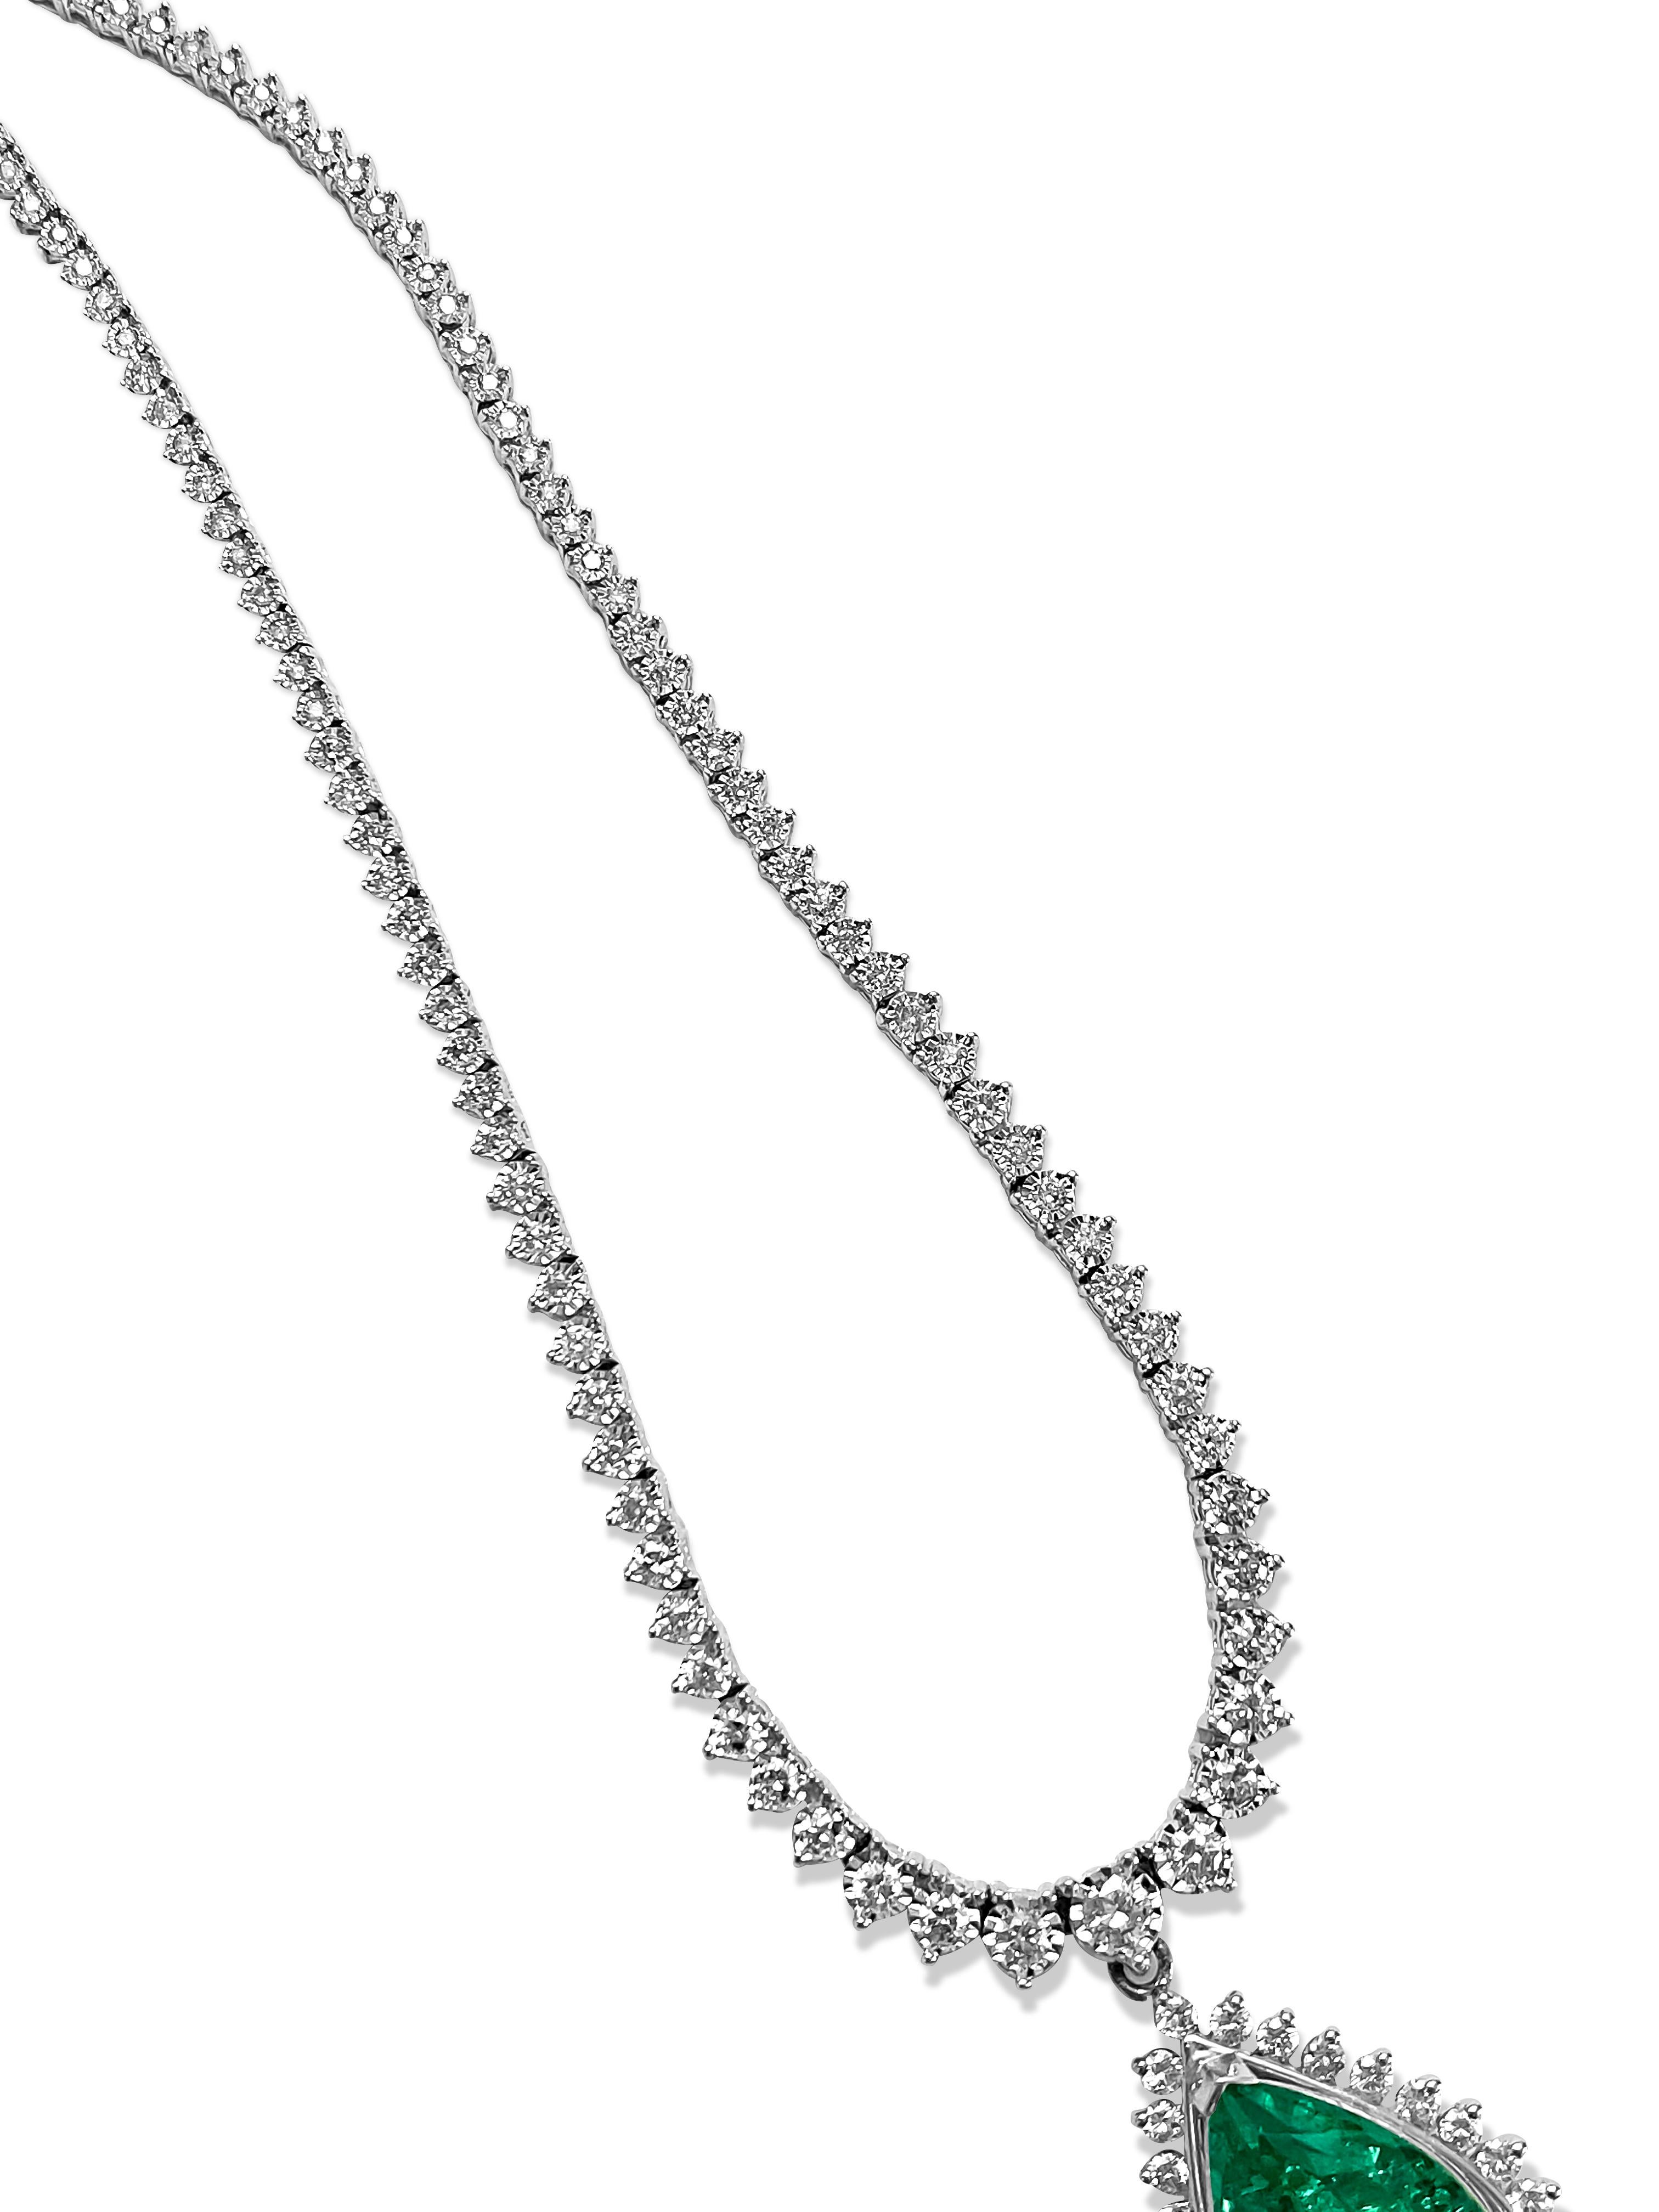 Pear Cut Certified 12.00 Carat Colombian Emerald Diamond Necklace 14 Karat White Gold For Sale